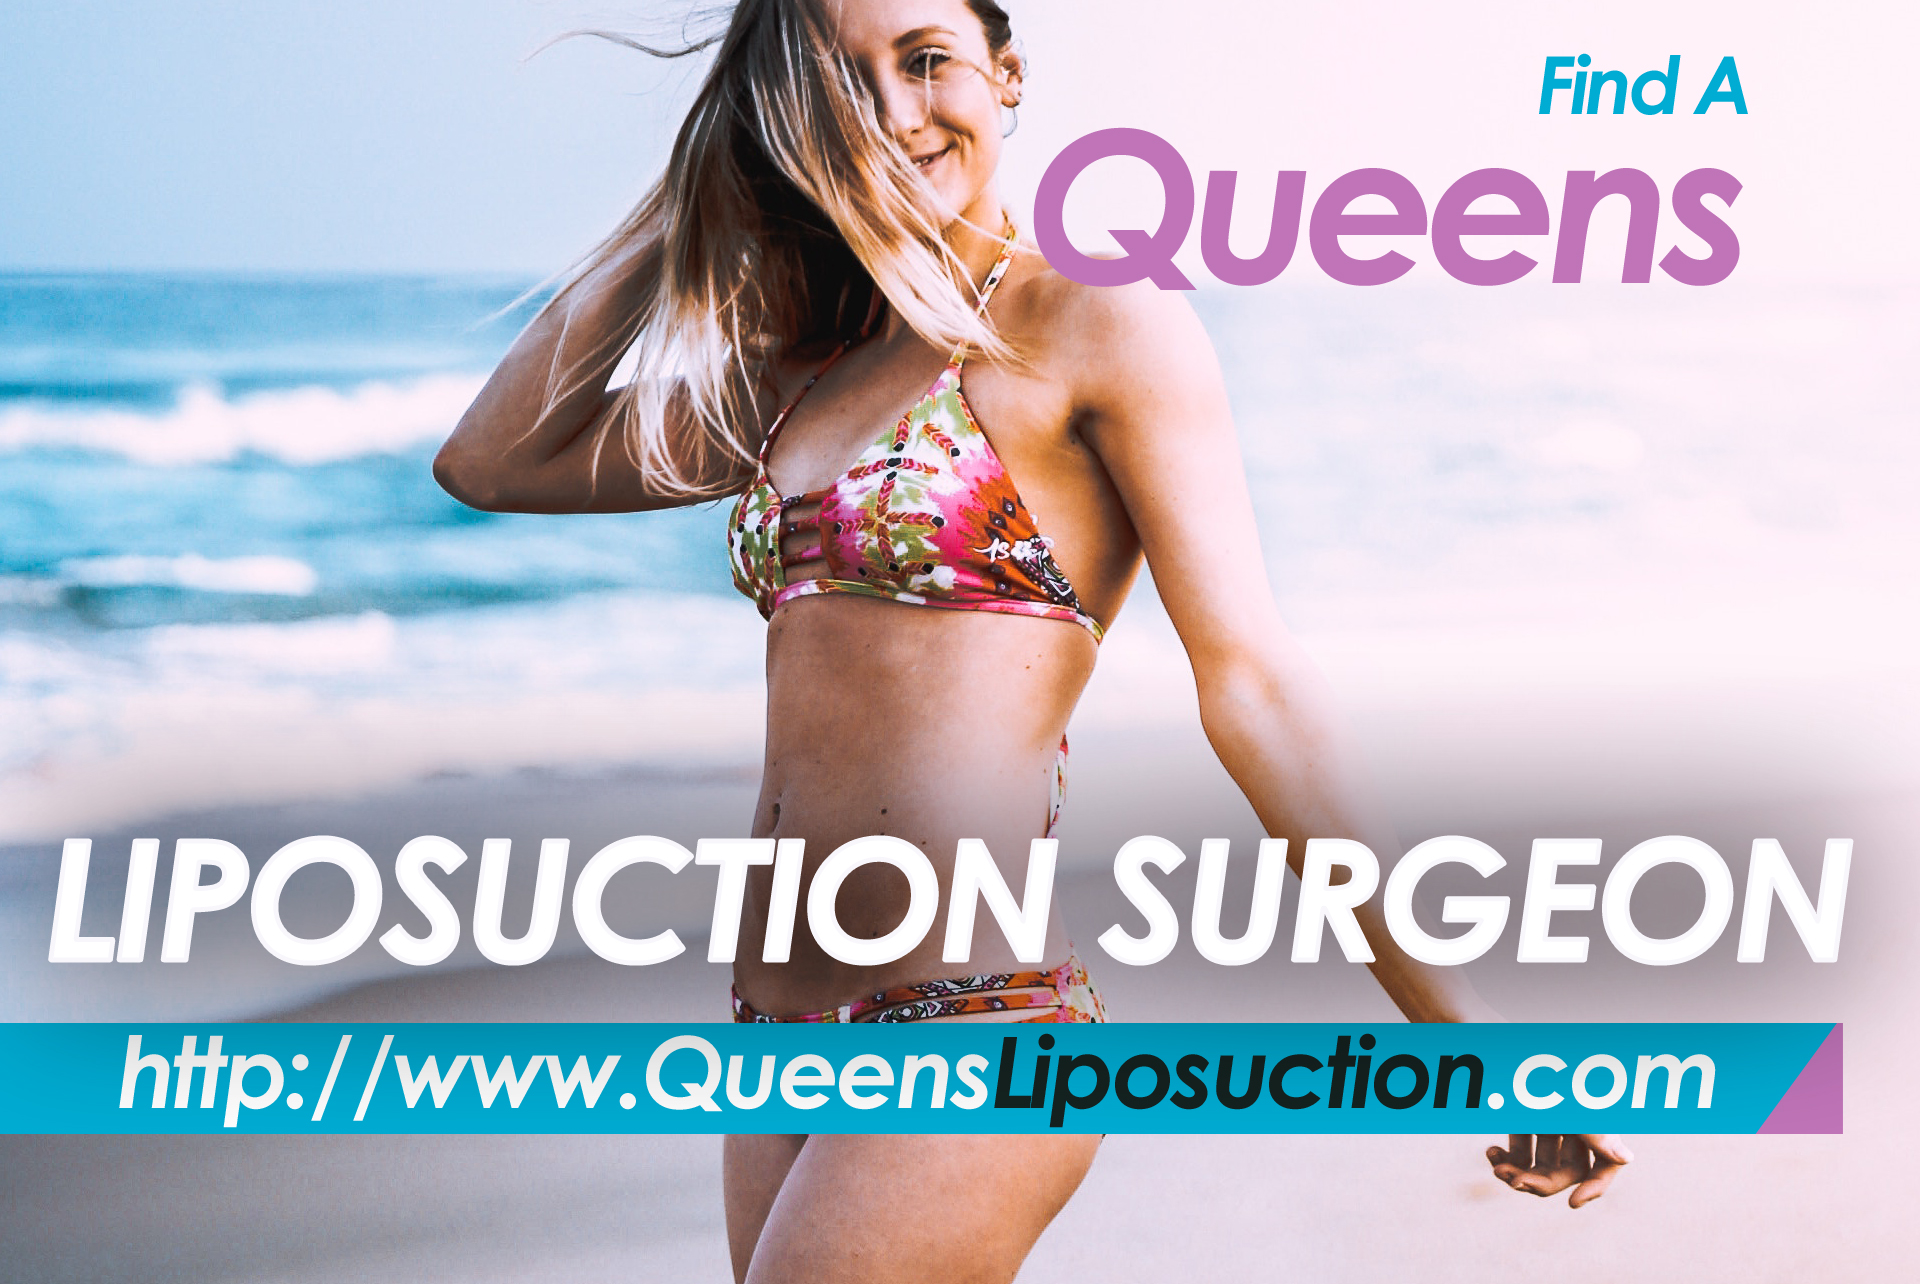 Find a Queens Liposuction Surgeon